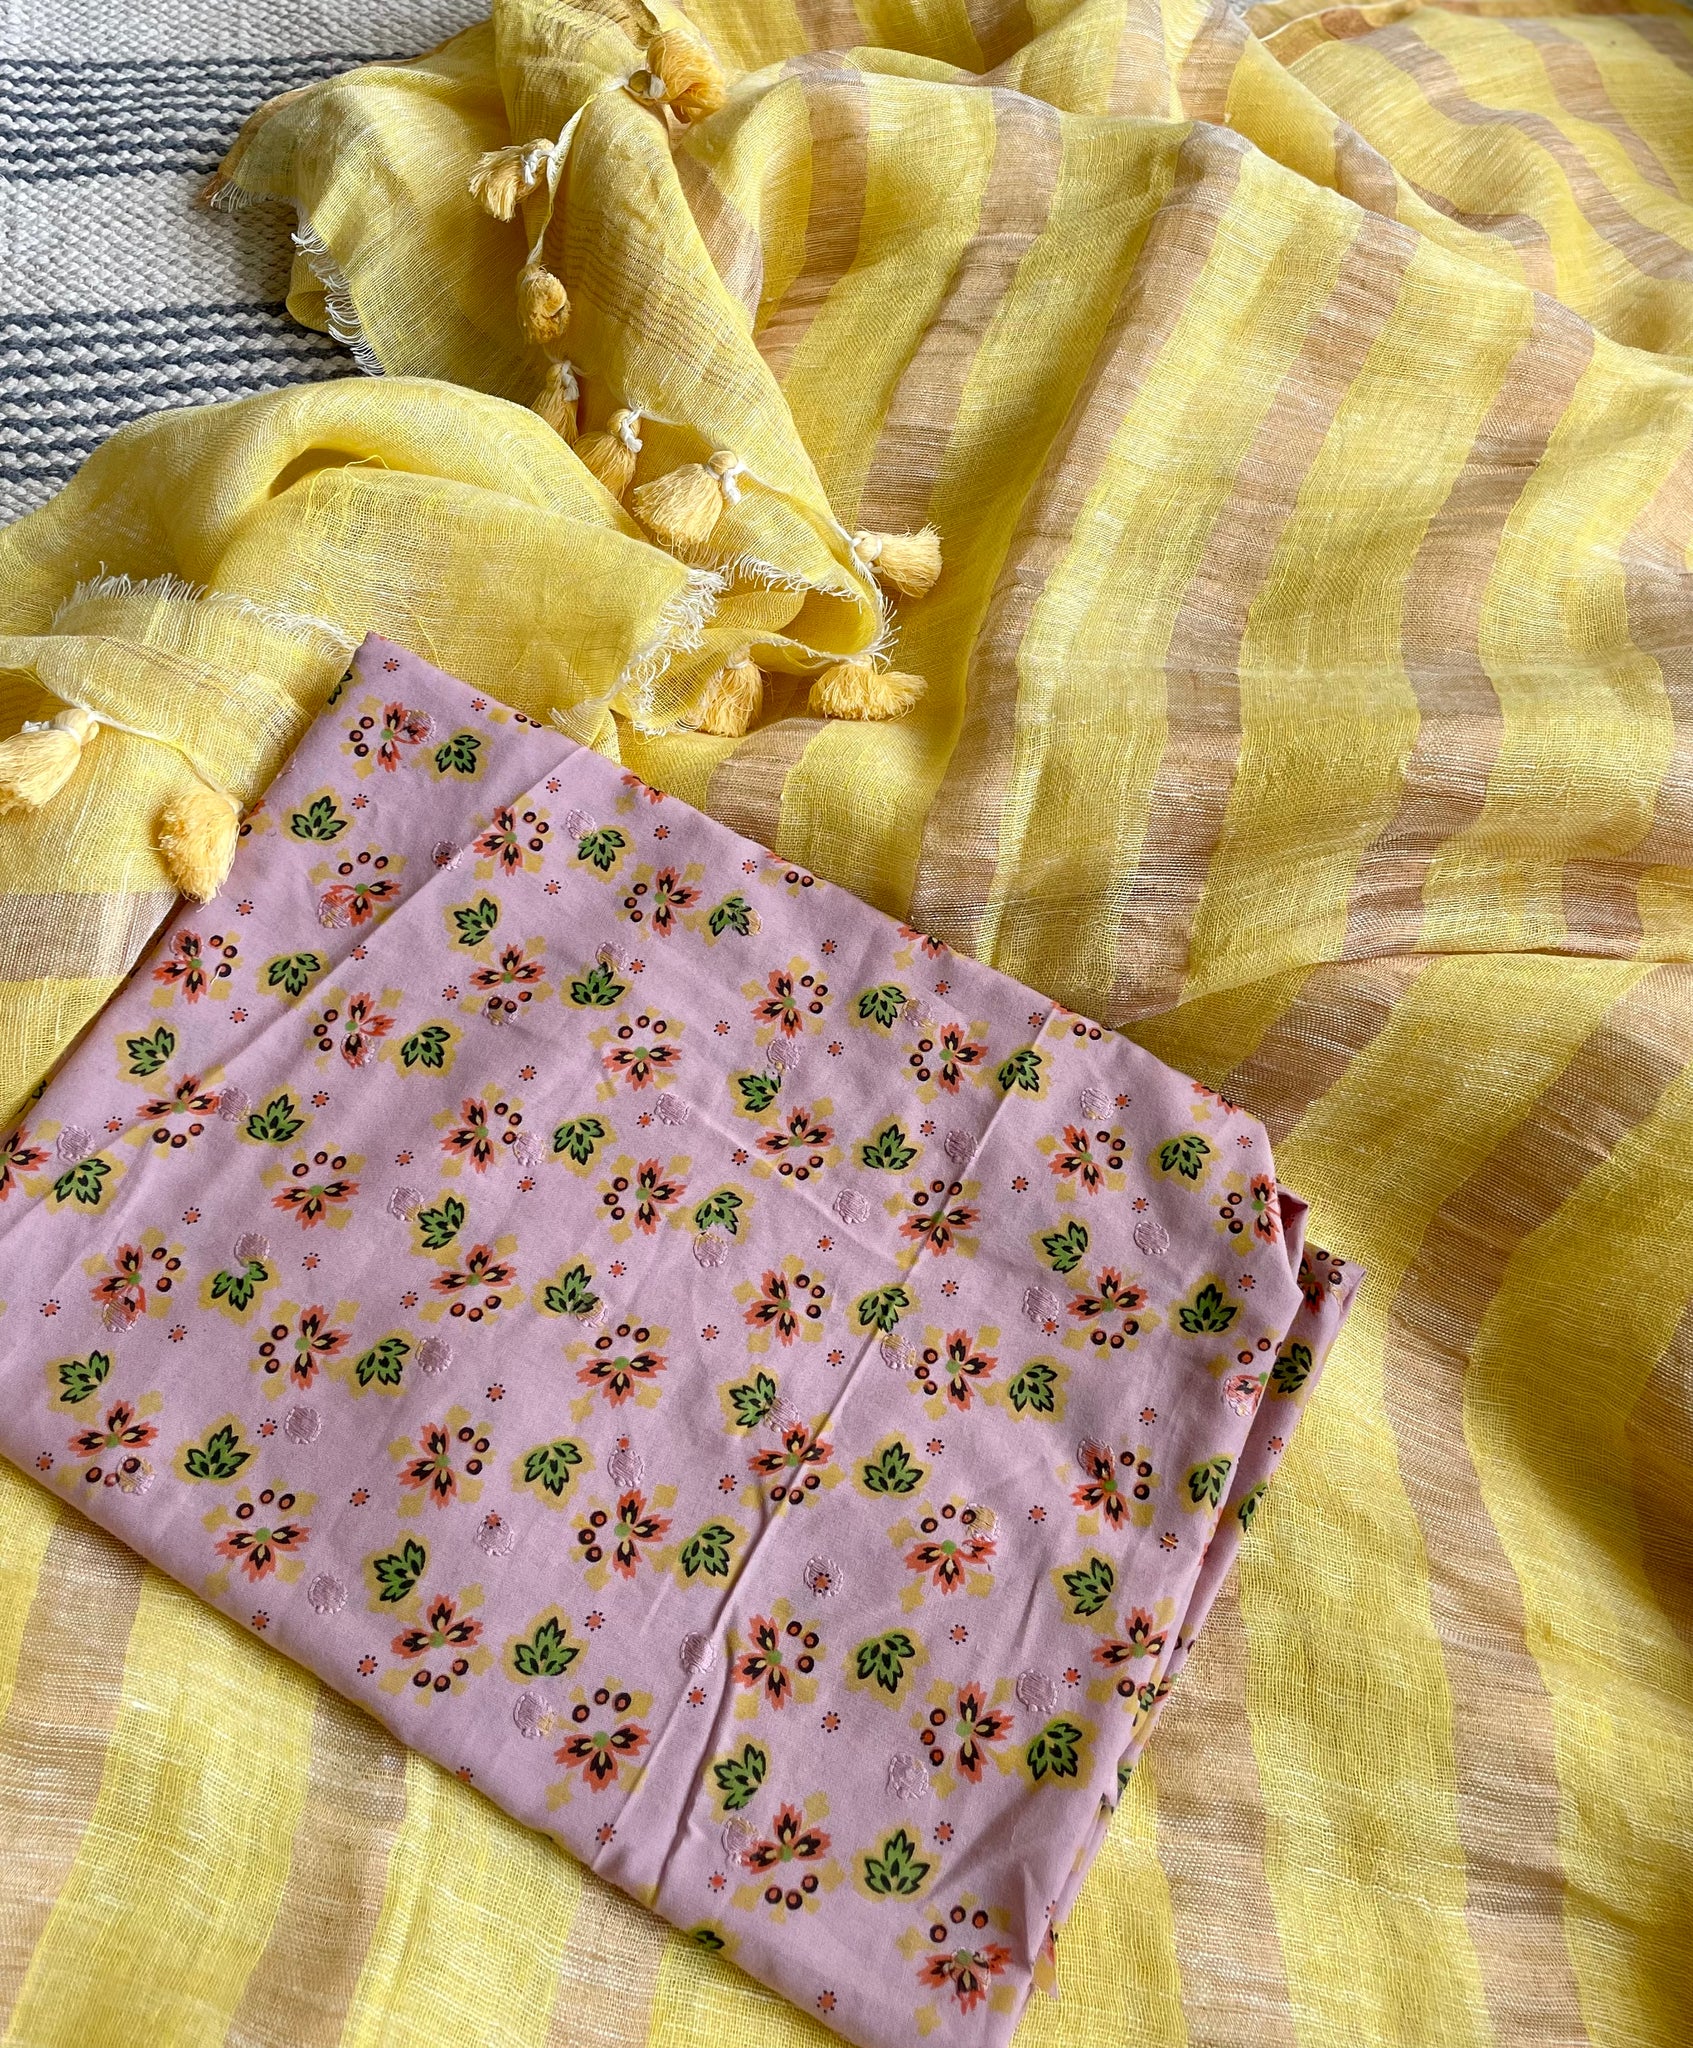 Handloom Linen yellow saree